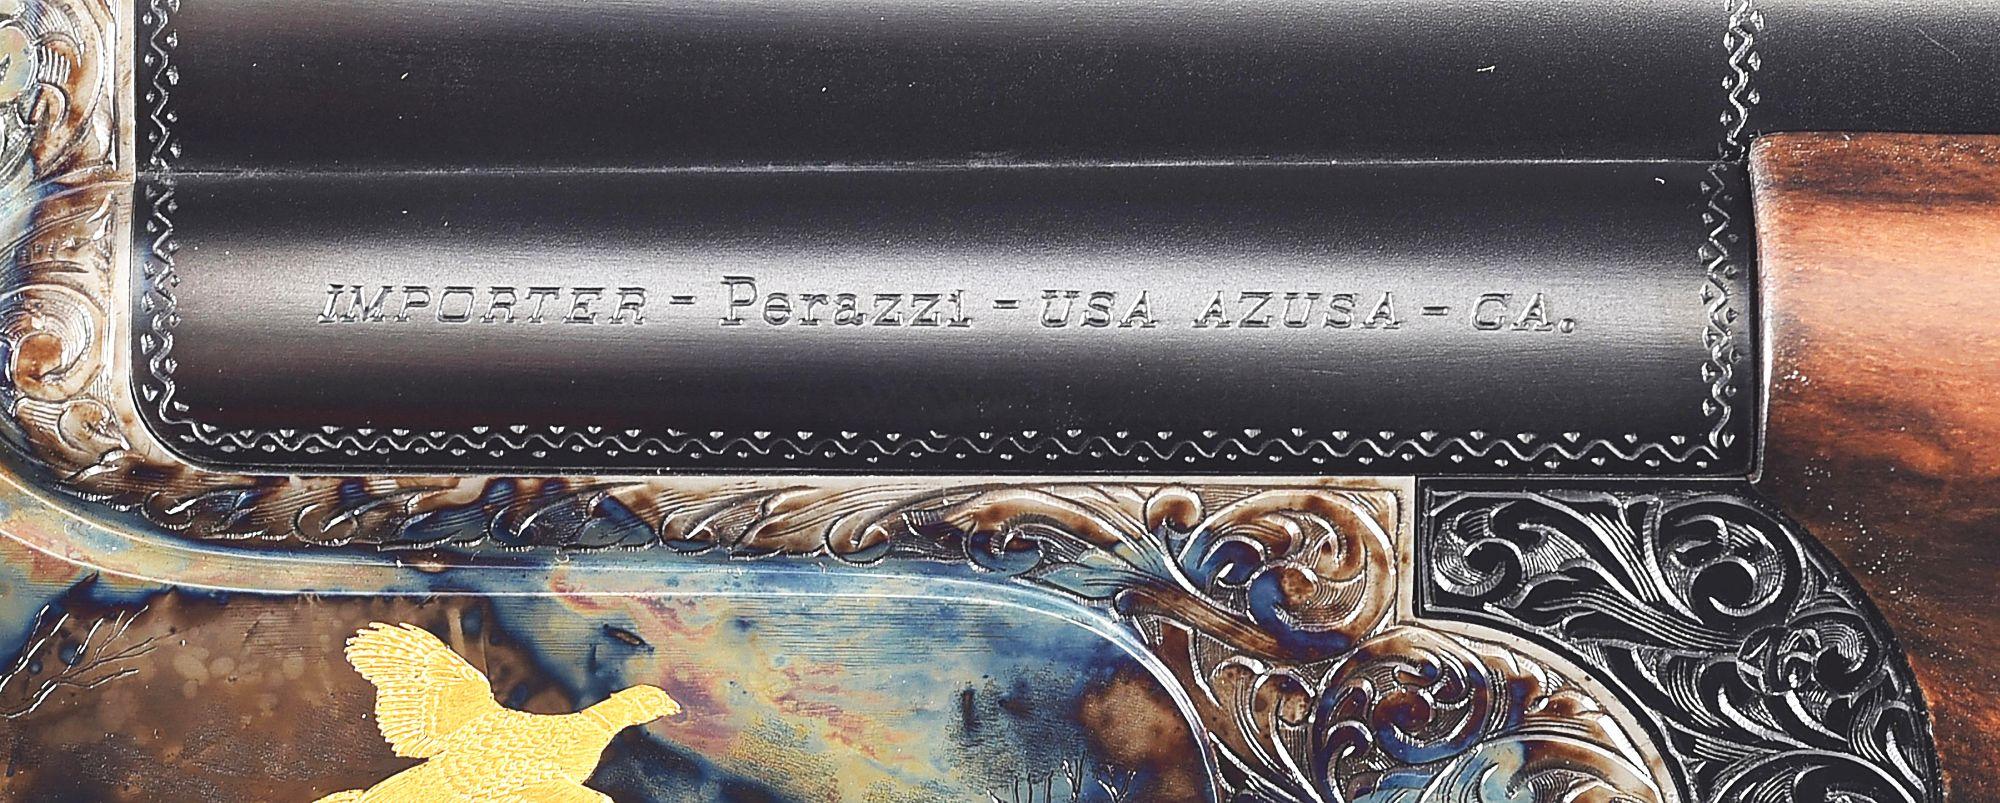 (M) PERAZZI MX28 SC3 28 GAUGE OVER/UNDER SHOTGUN WITH CASE.